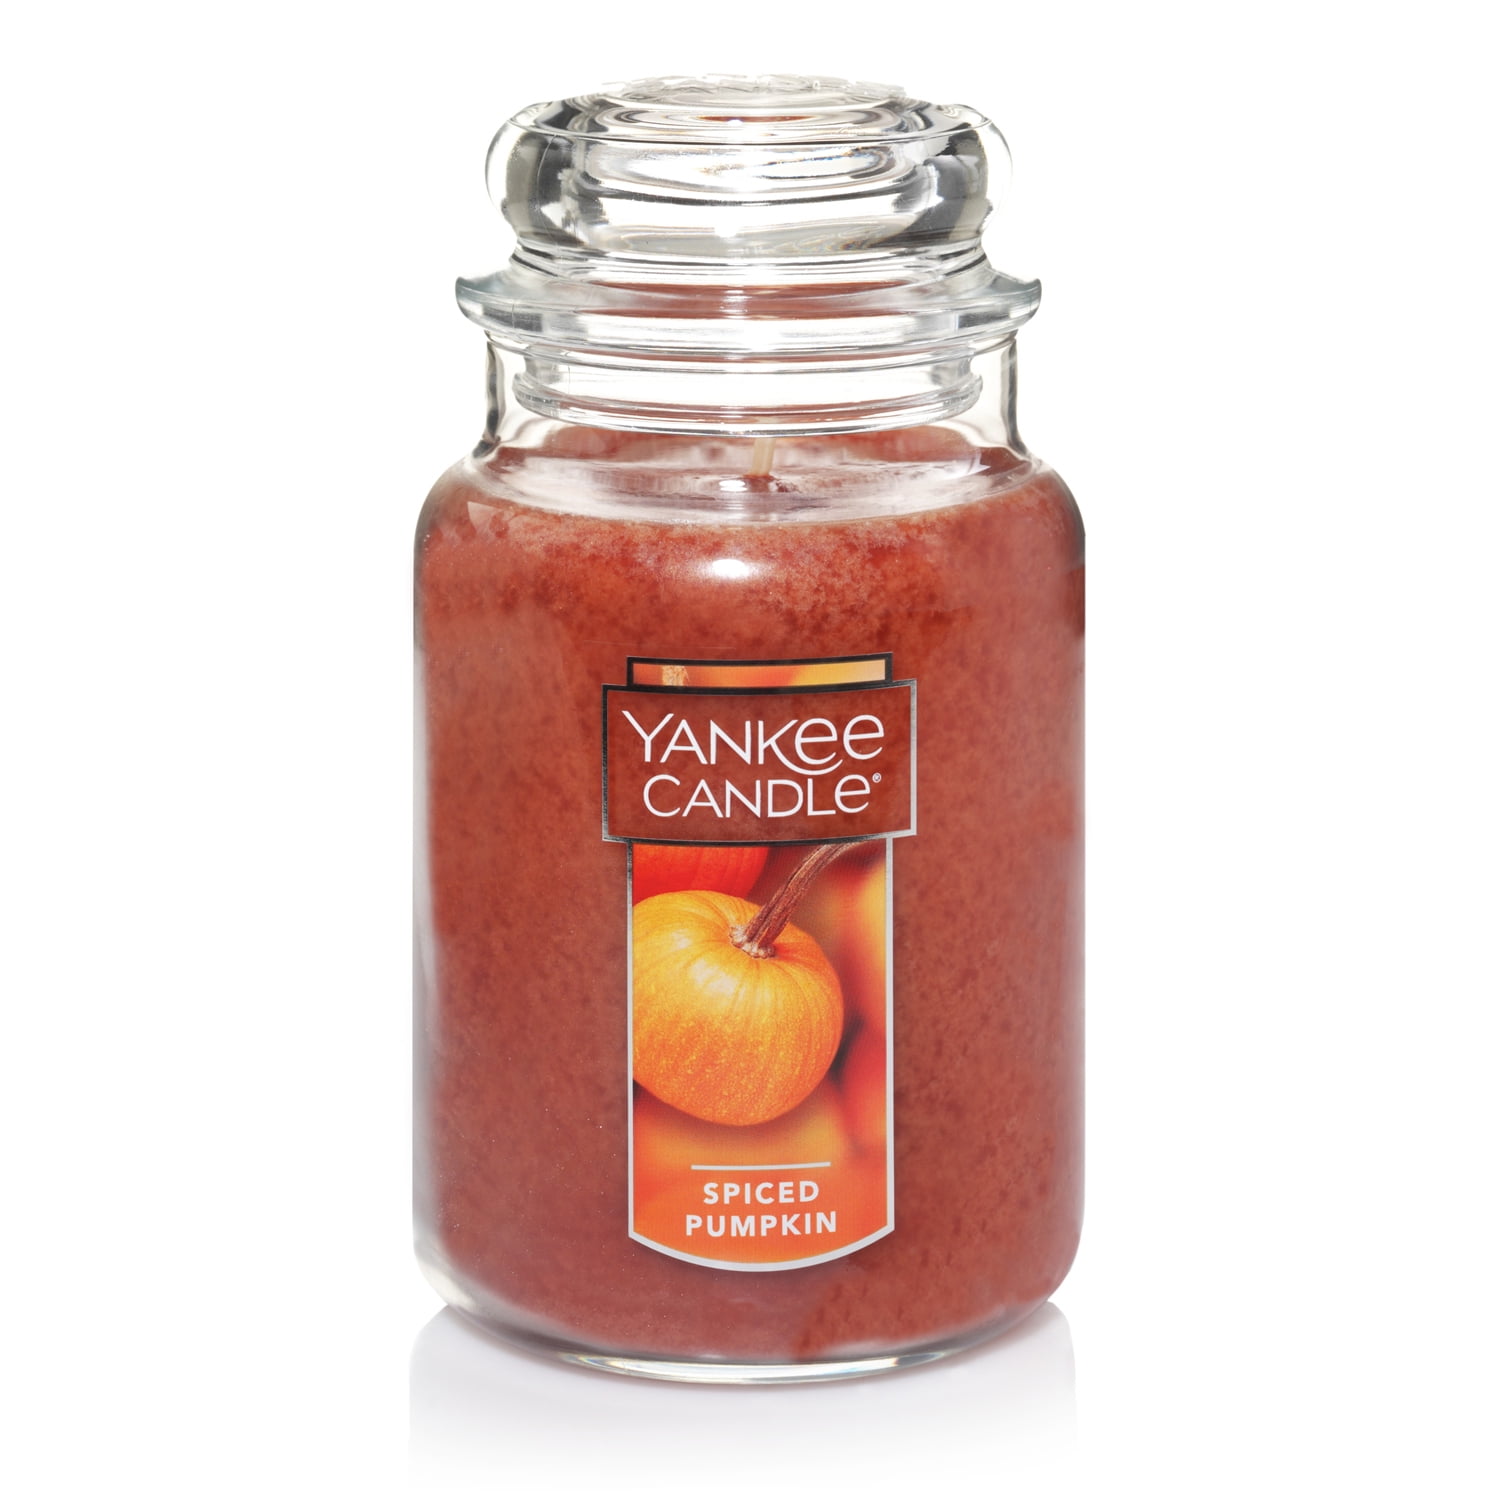 Yankee Candle Steam Pumpkin Lost Jar Candle Holder